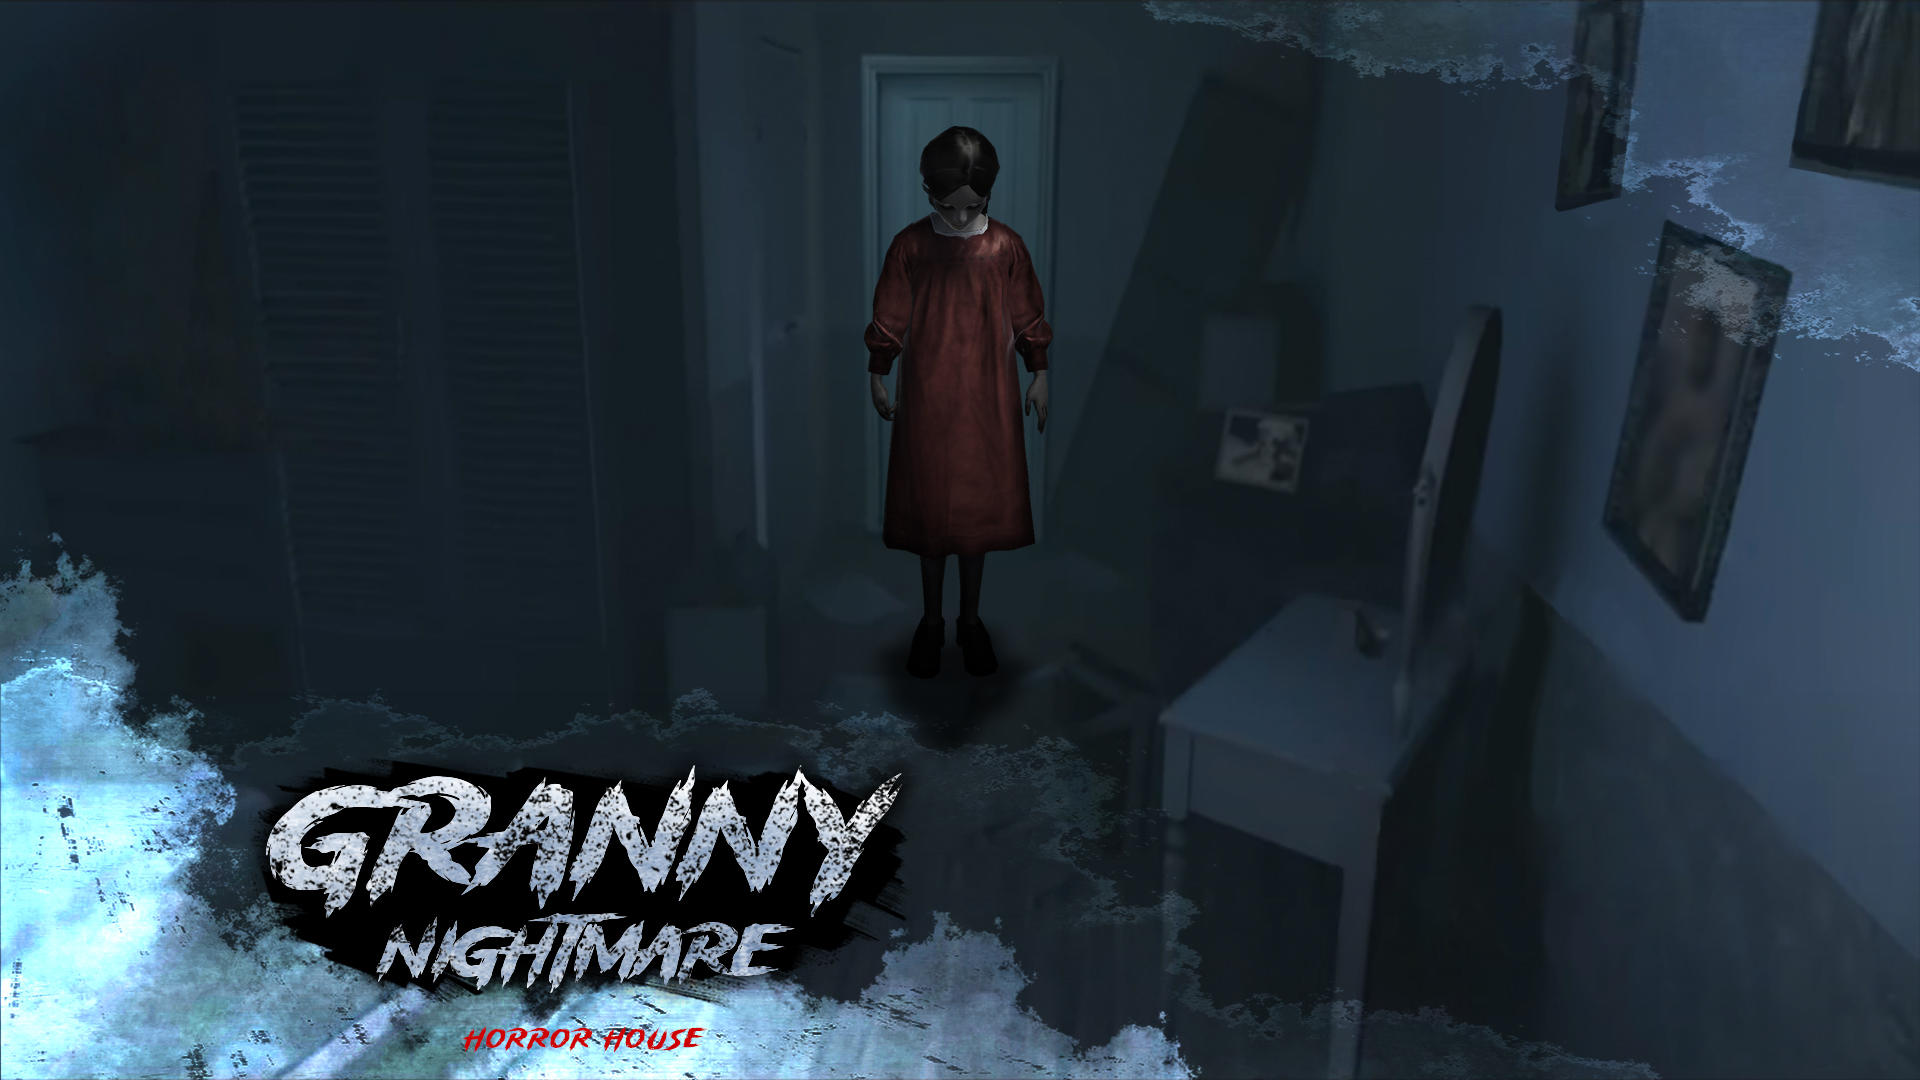 Granny 3 Review - Hardcore Droid - Horror 